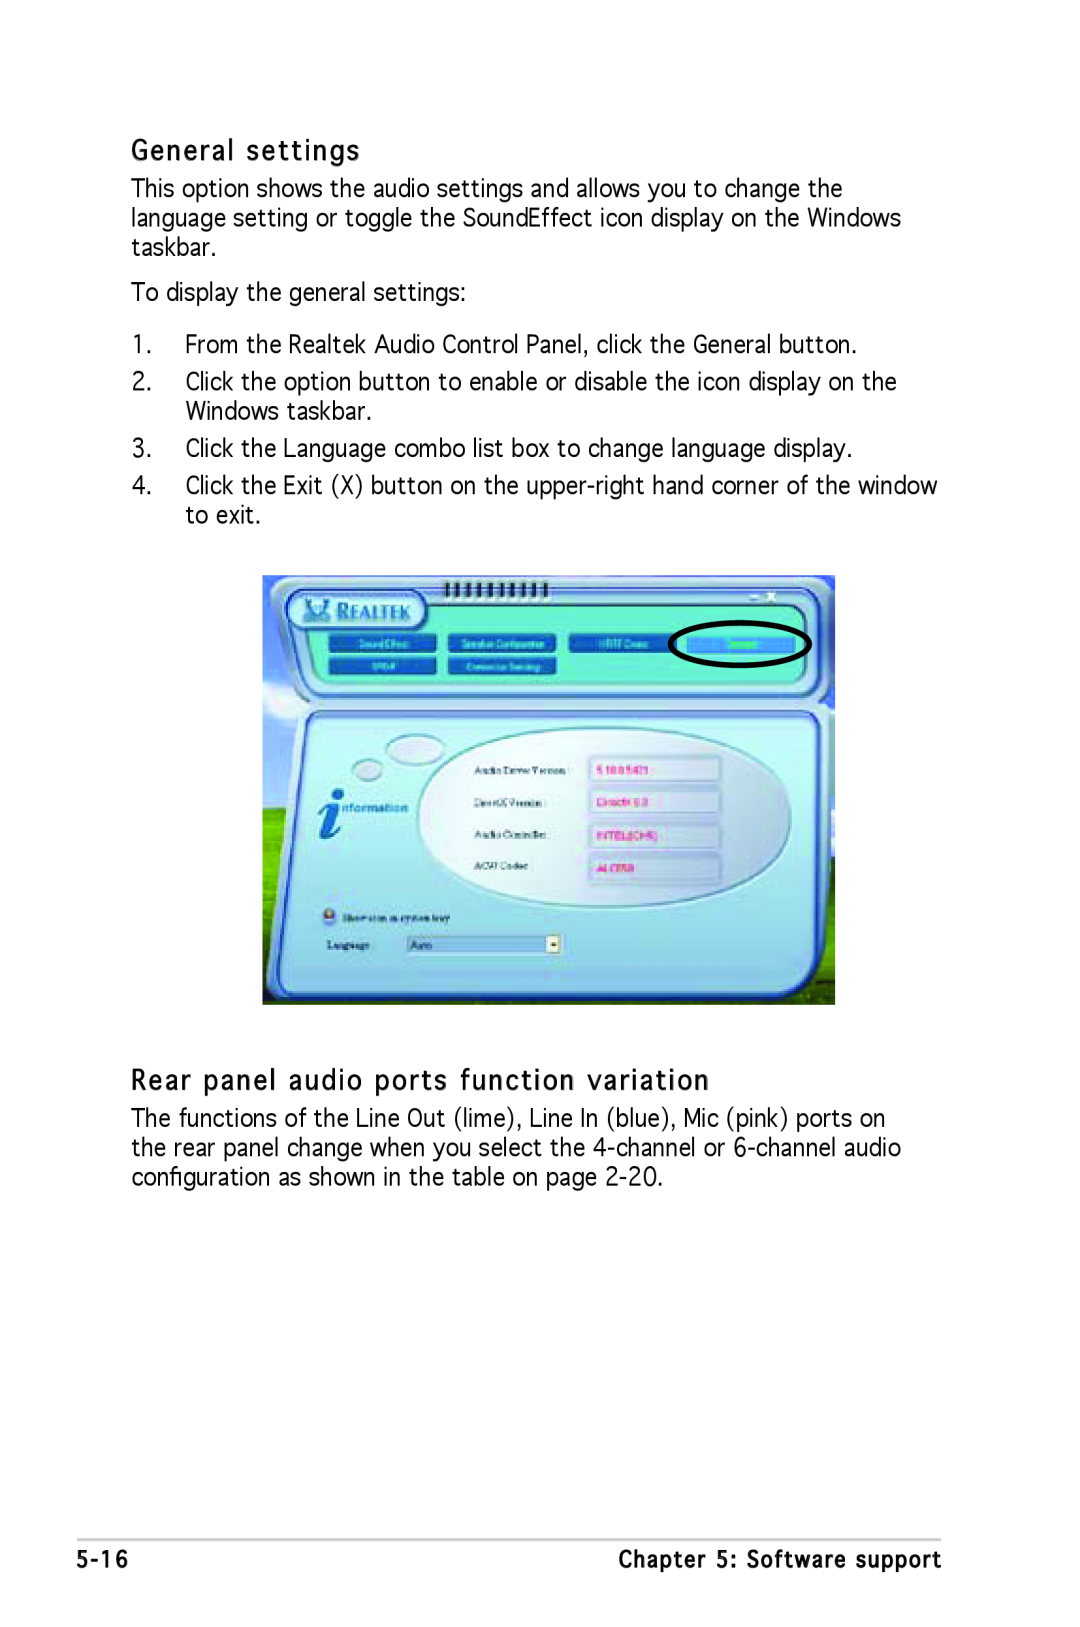 Asus A8N-SLI SE manual General settings, Rear panel audio ports function variation 